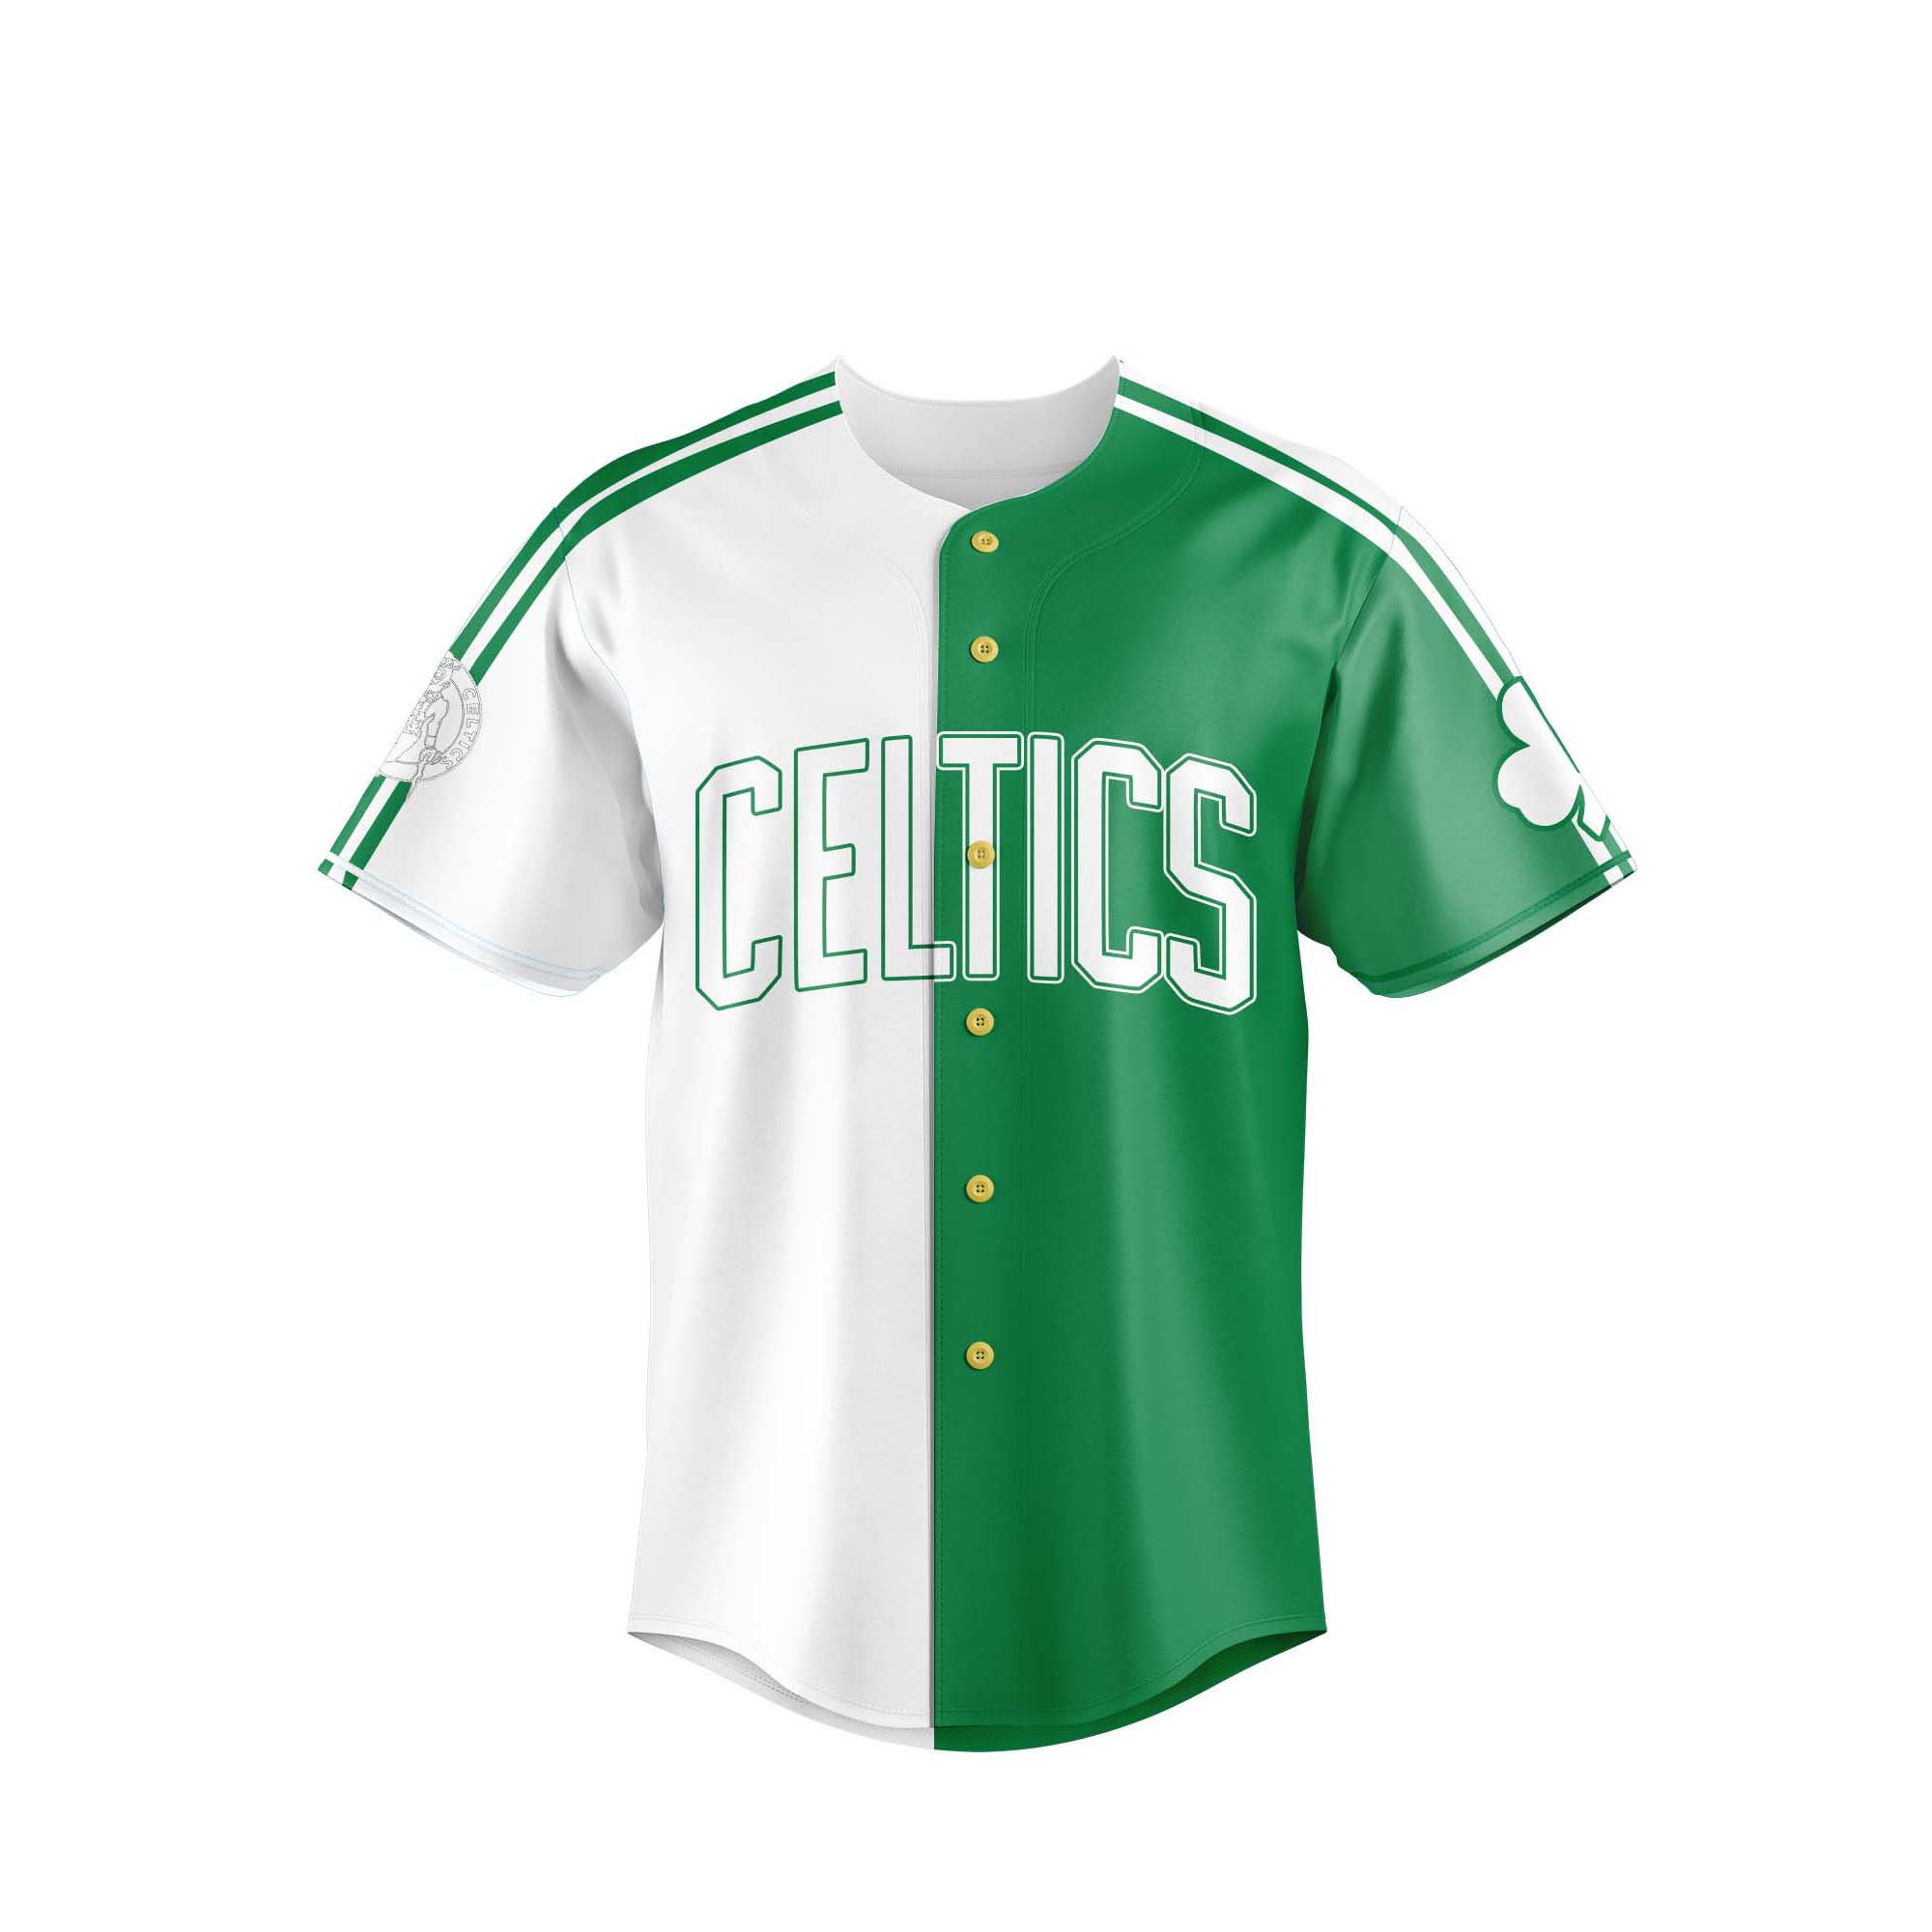 Boston Celtics Basketball Jersey 2023 - BTF Store